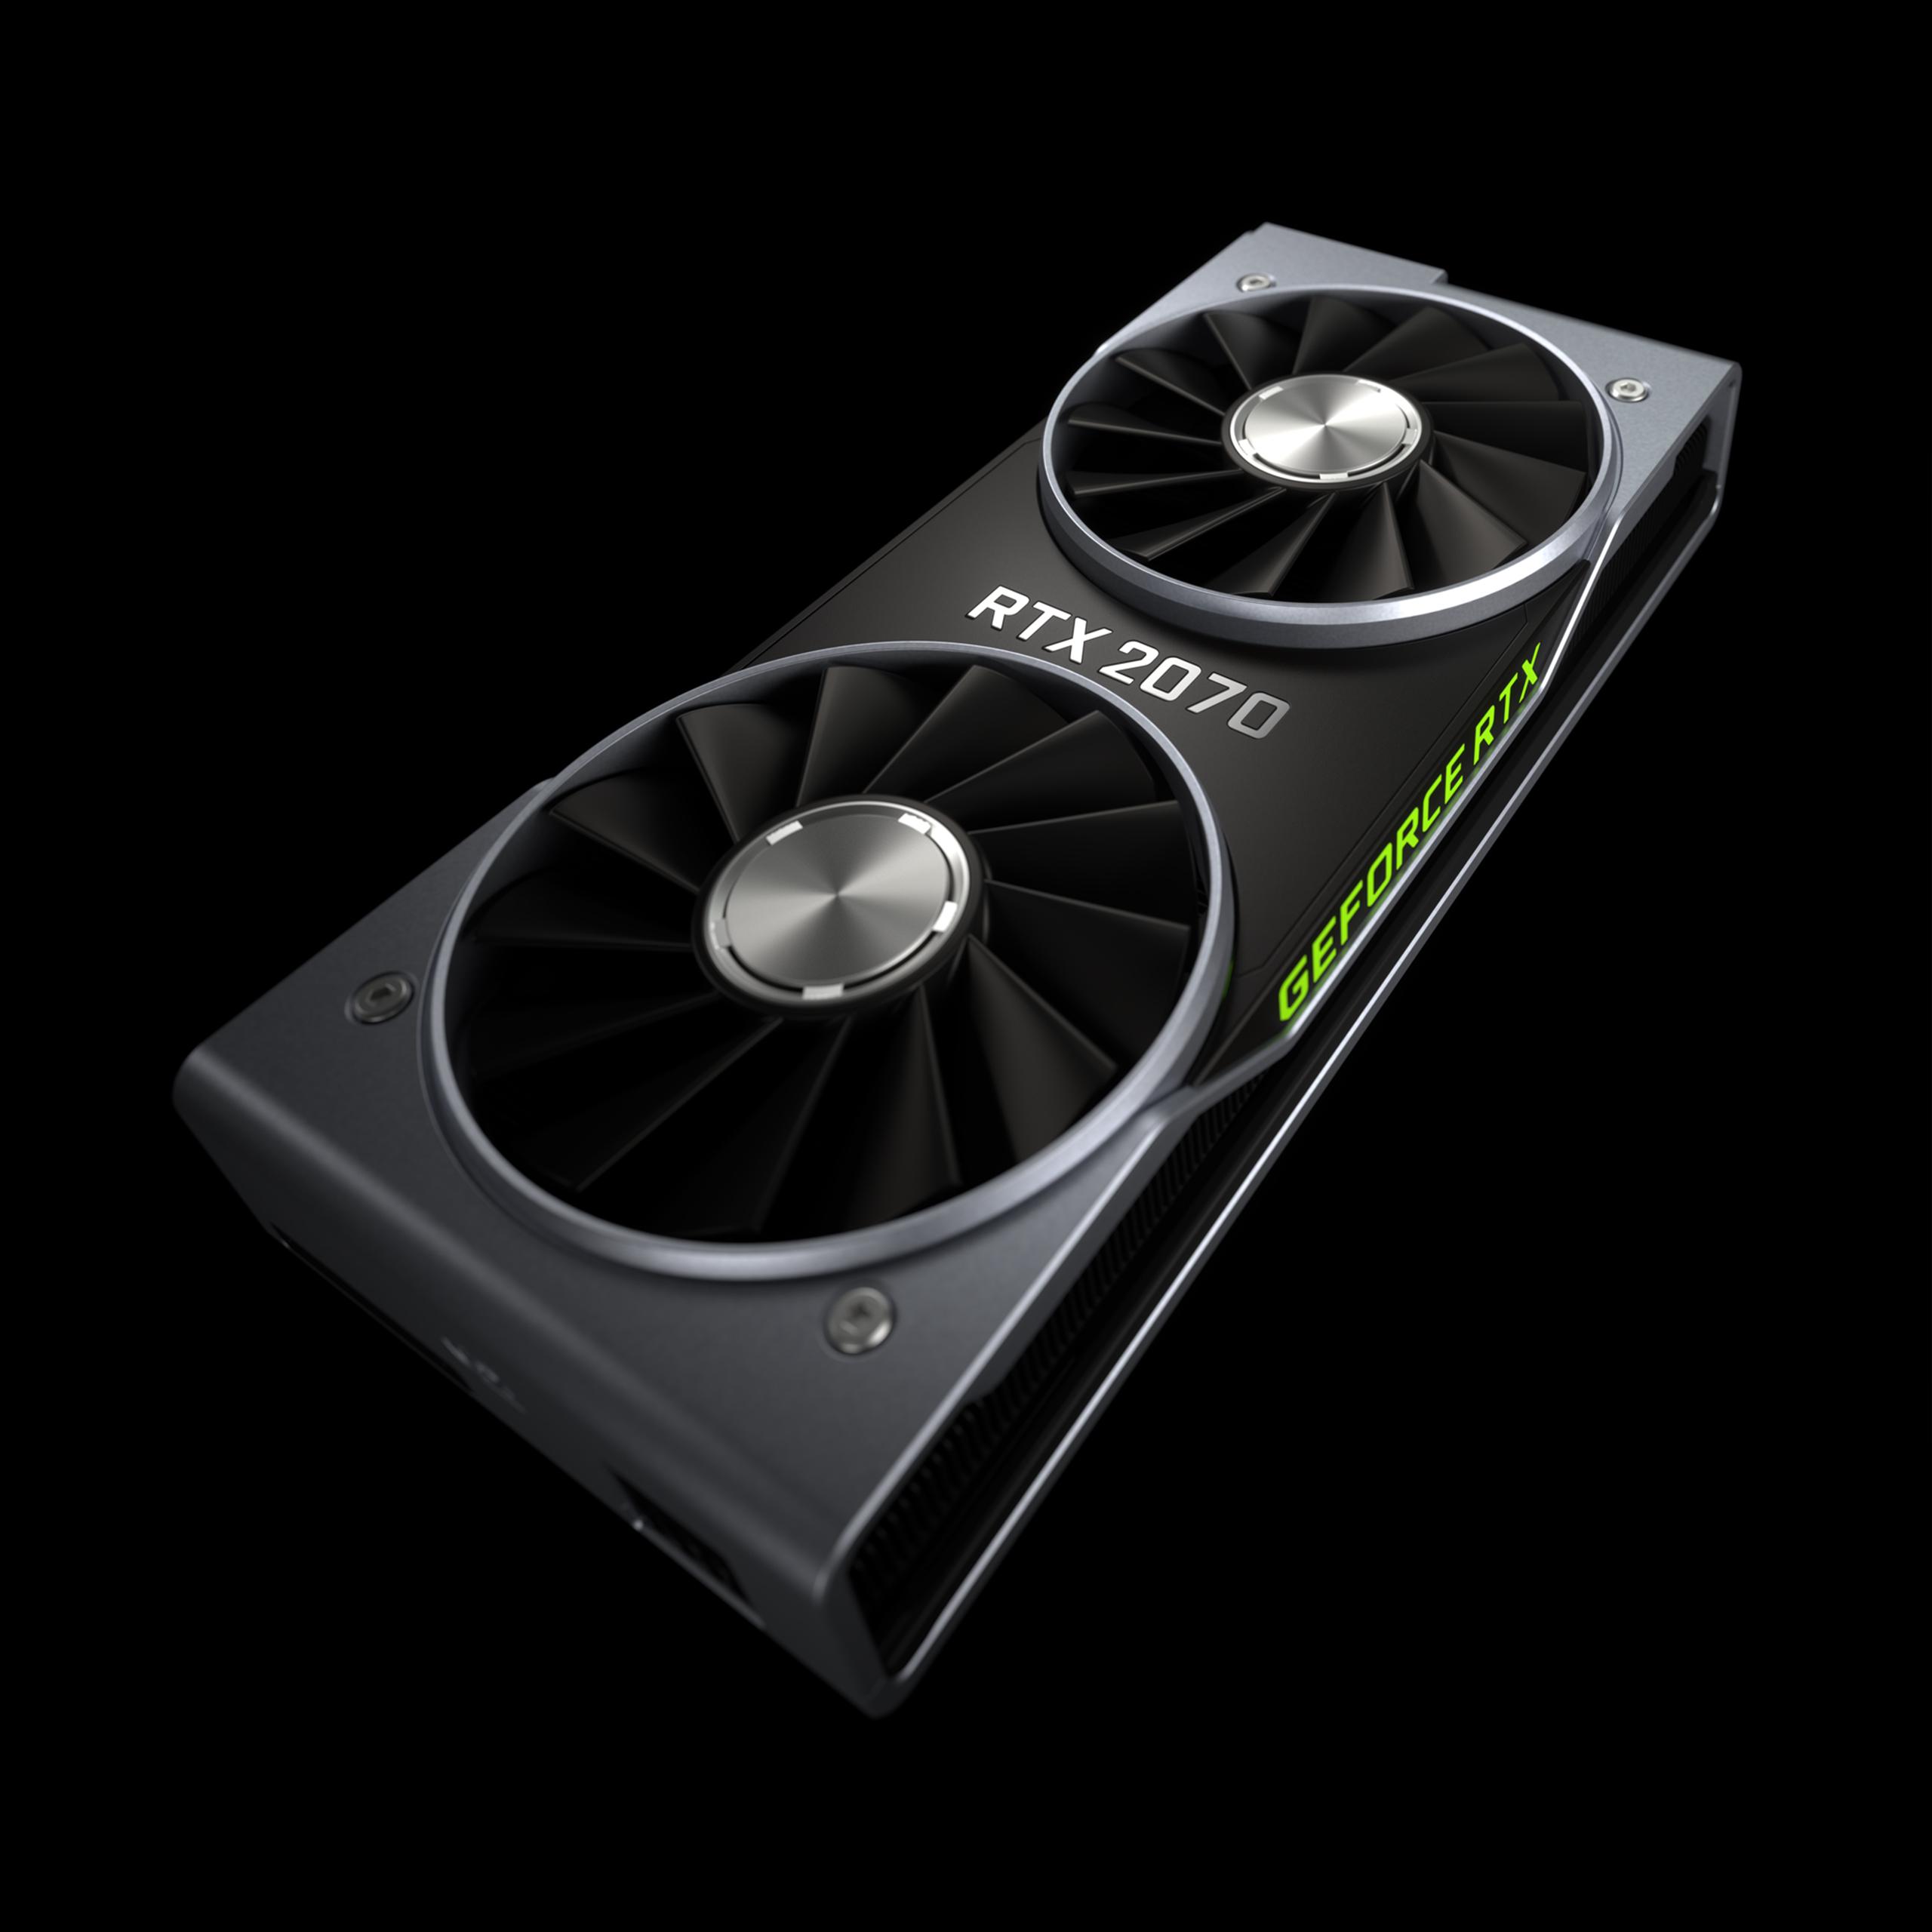 GeForce RTX 2070 Graphics Card